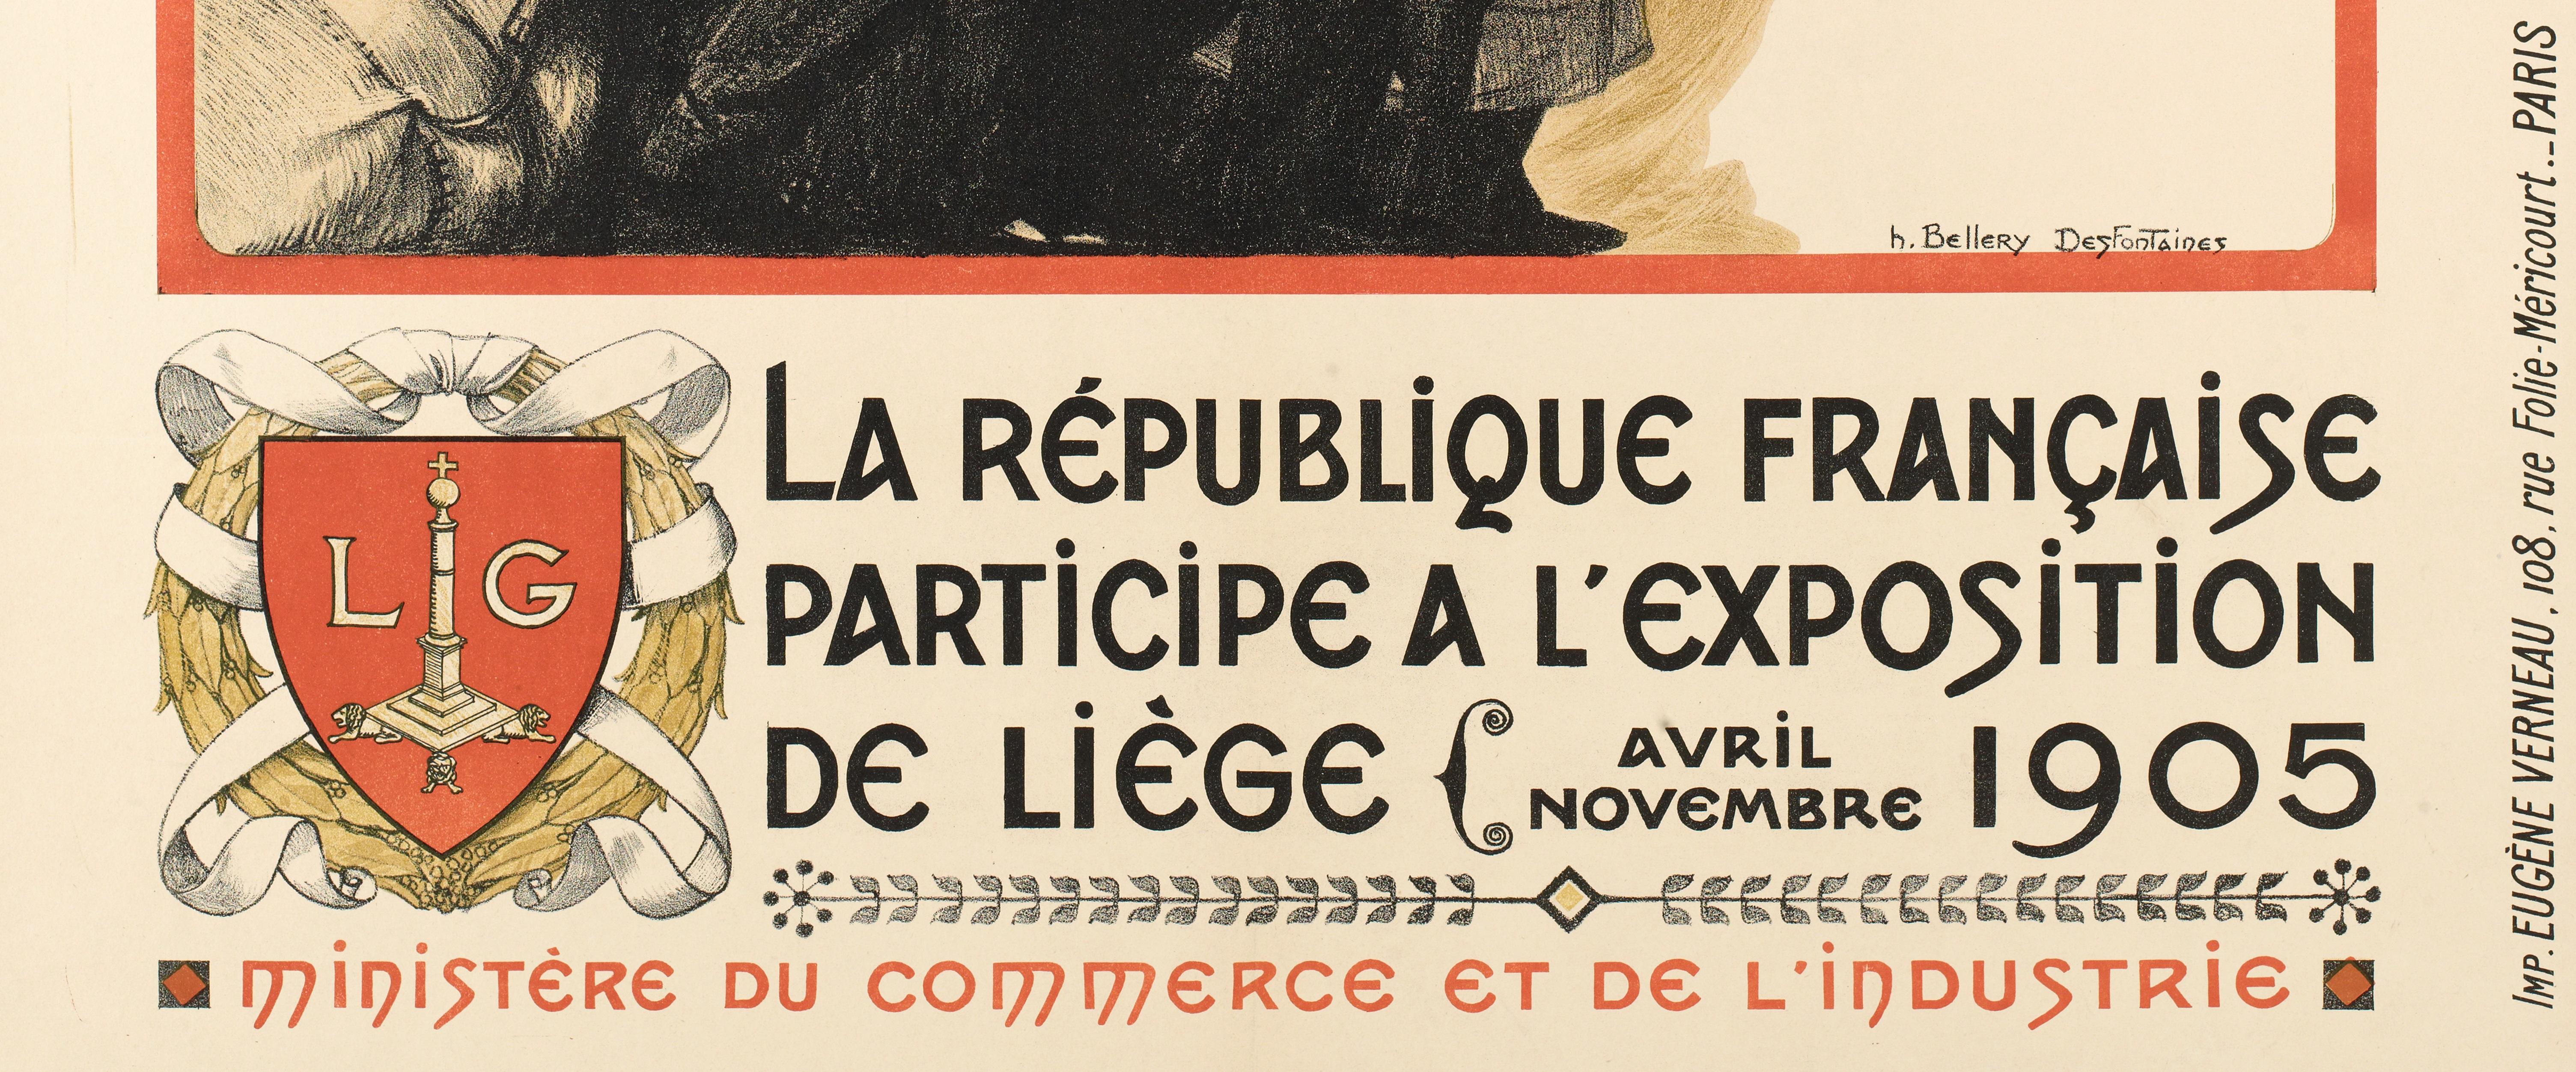 Belgian Original Poster-Henri Bellery-Desfontaines-Universal Expo Liège, 1905 For Sale